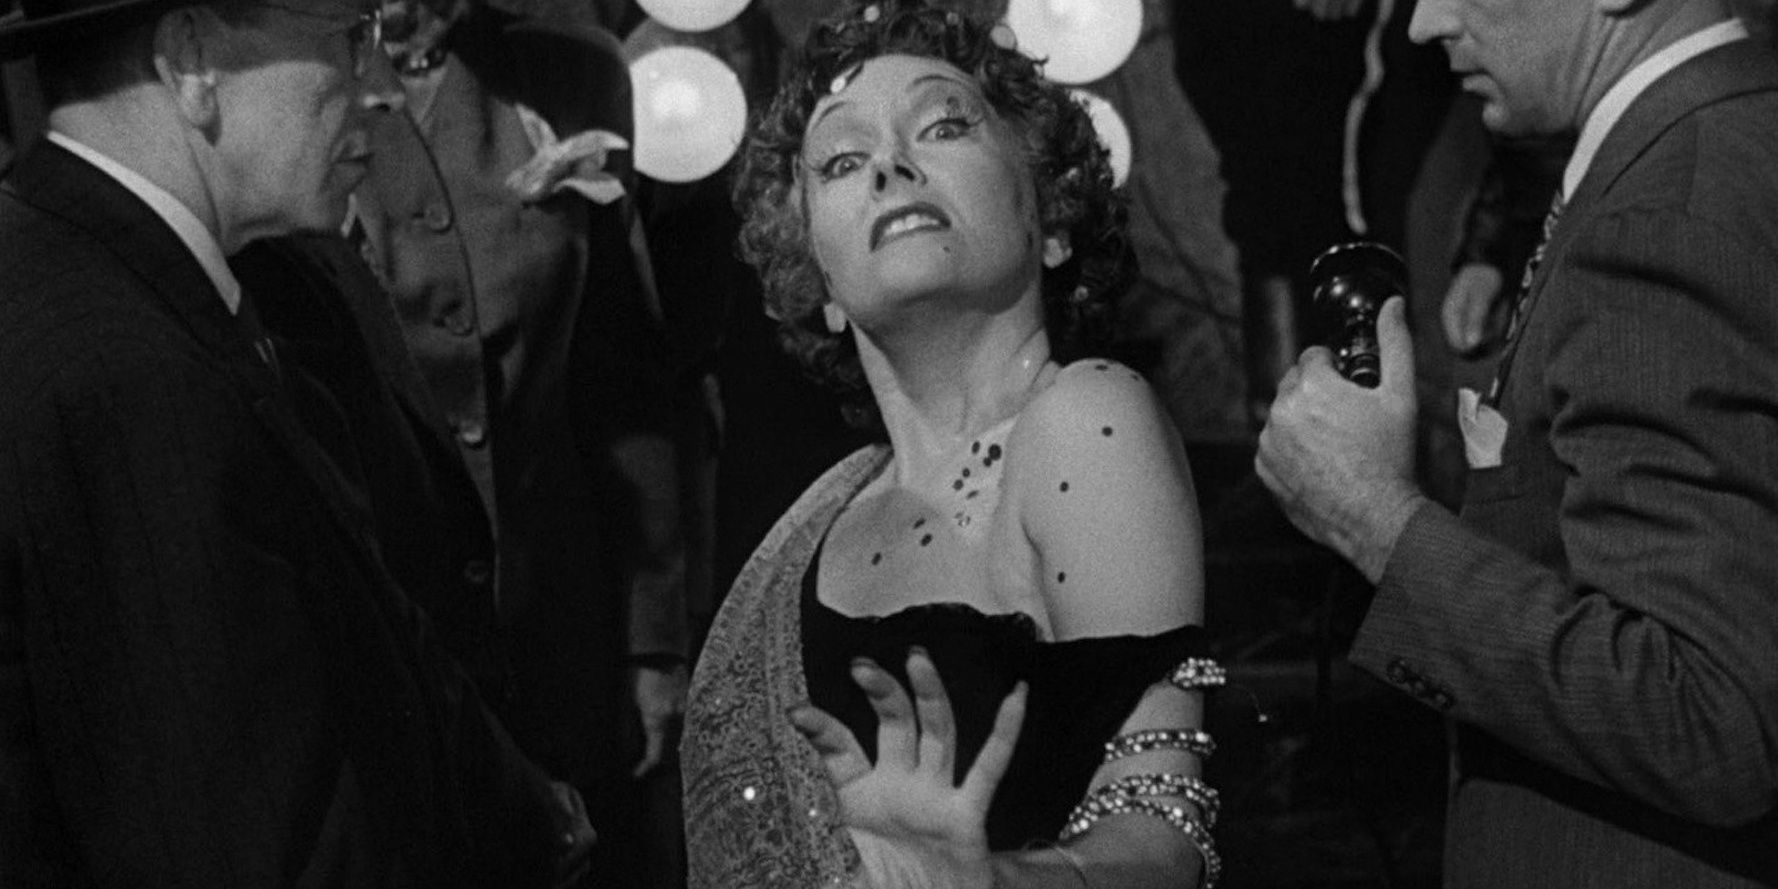 Norma Desmond looking into the camera as the press swarm